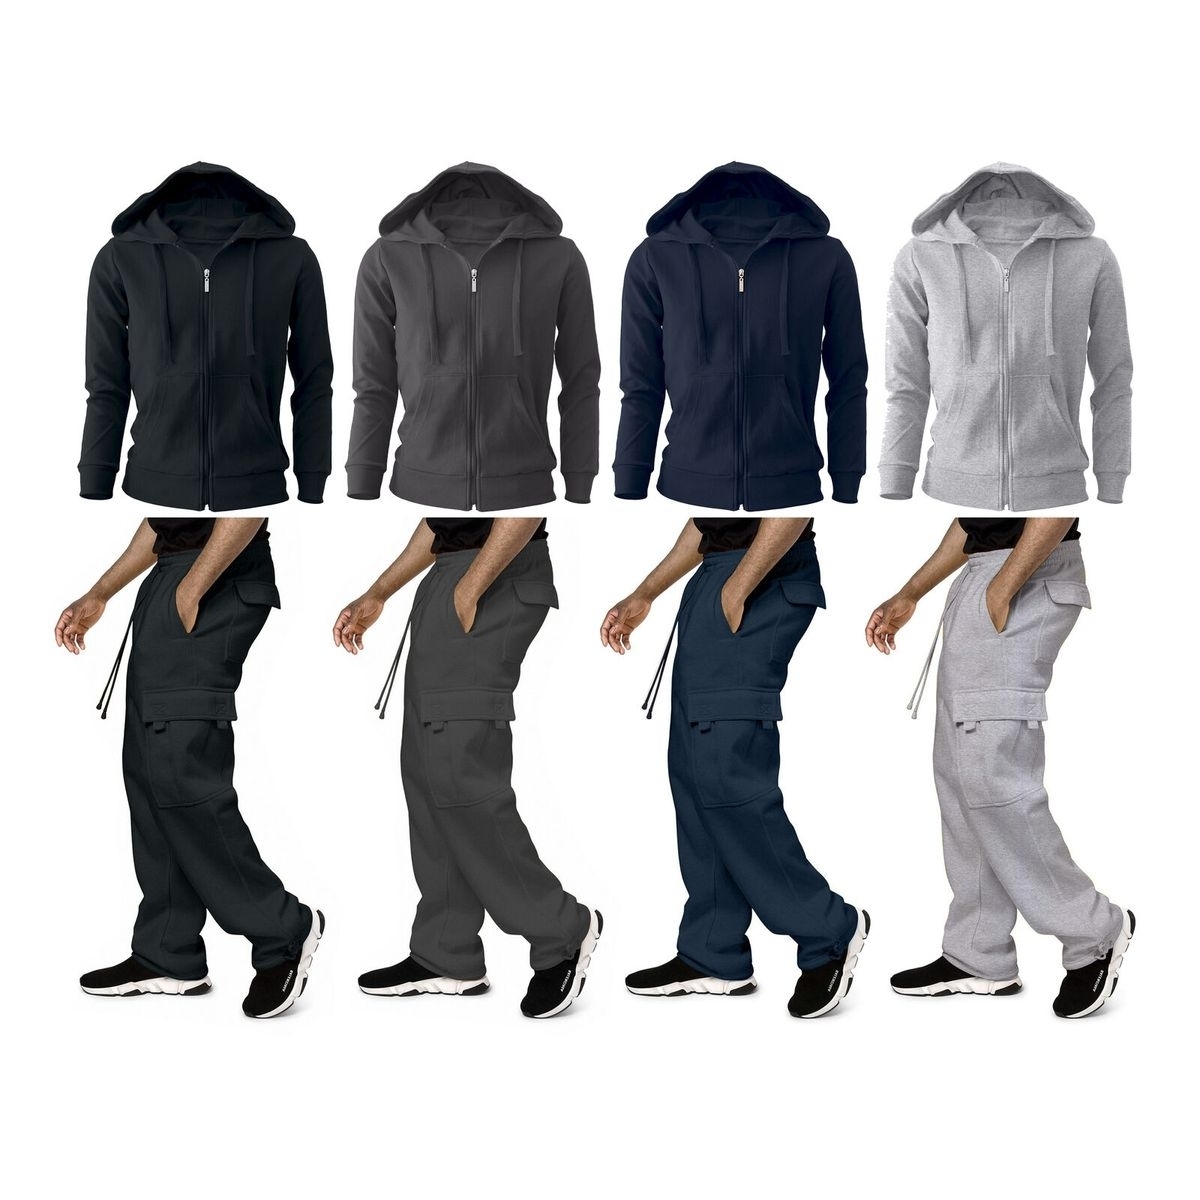 Men's Big & Tall Winter Warm Athletic Active Cozy Fleece Lined Multi-Pocket Full Zip Up Cargo Tracksuit - Black, Small